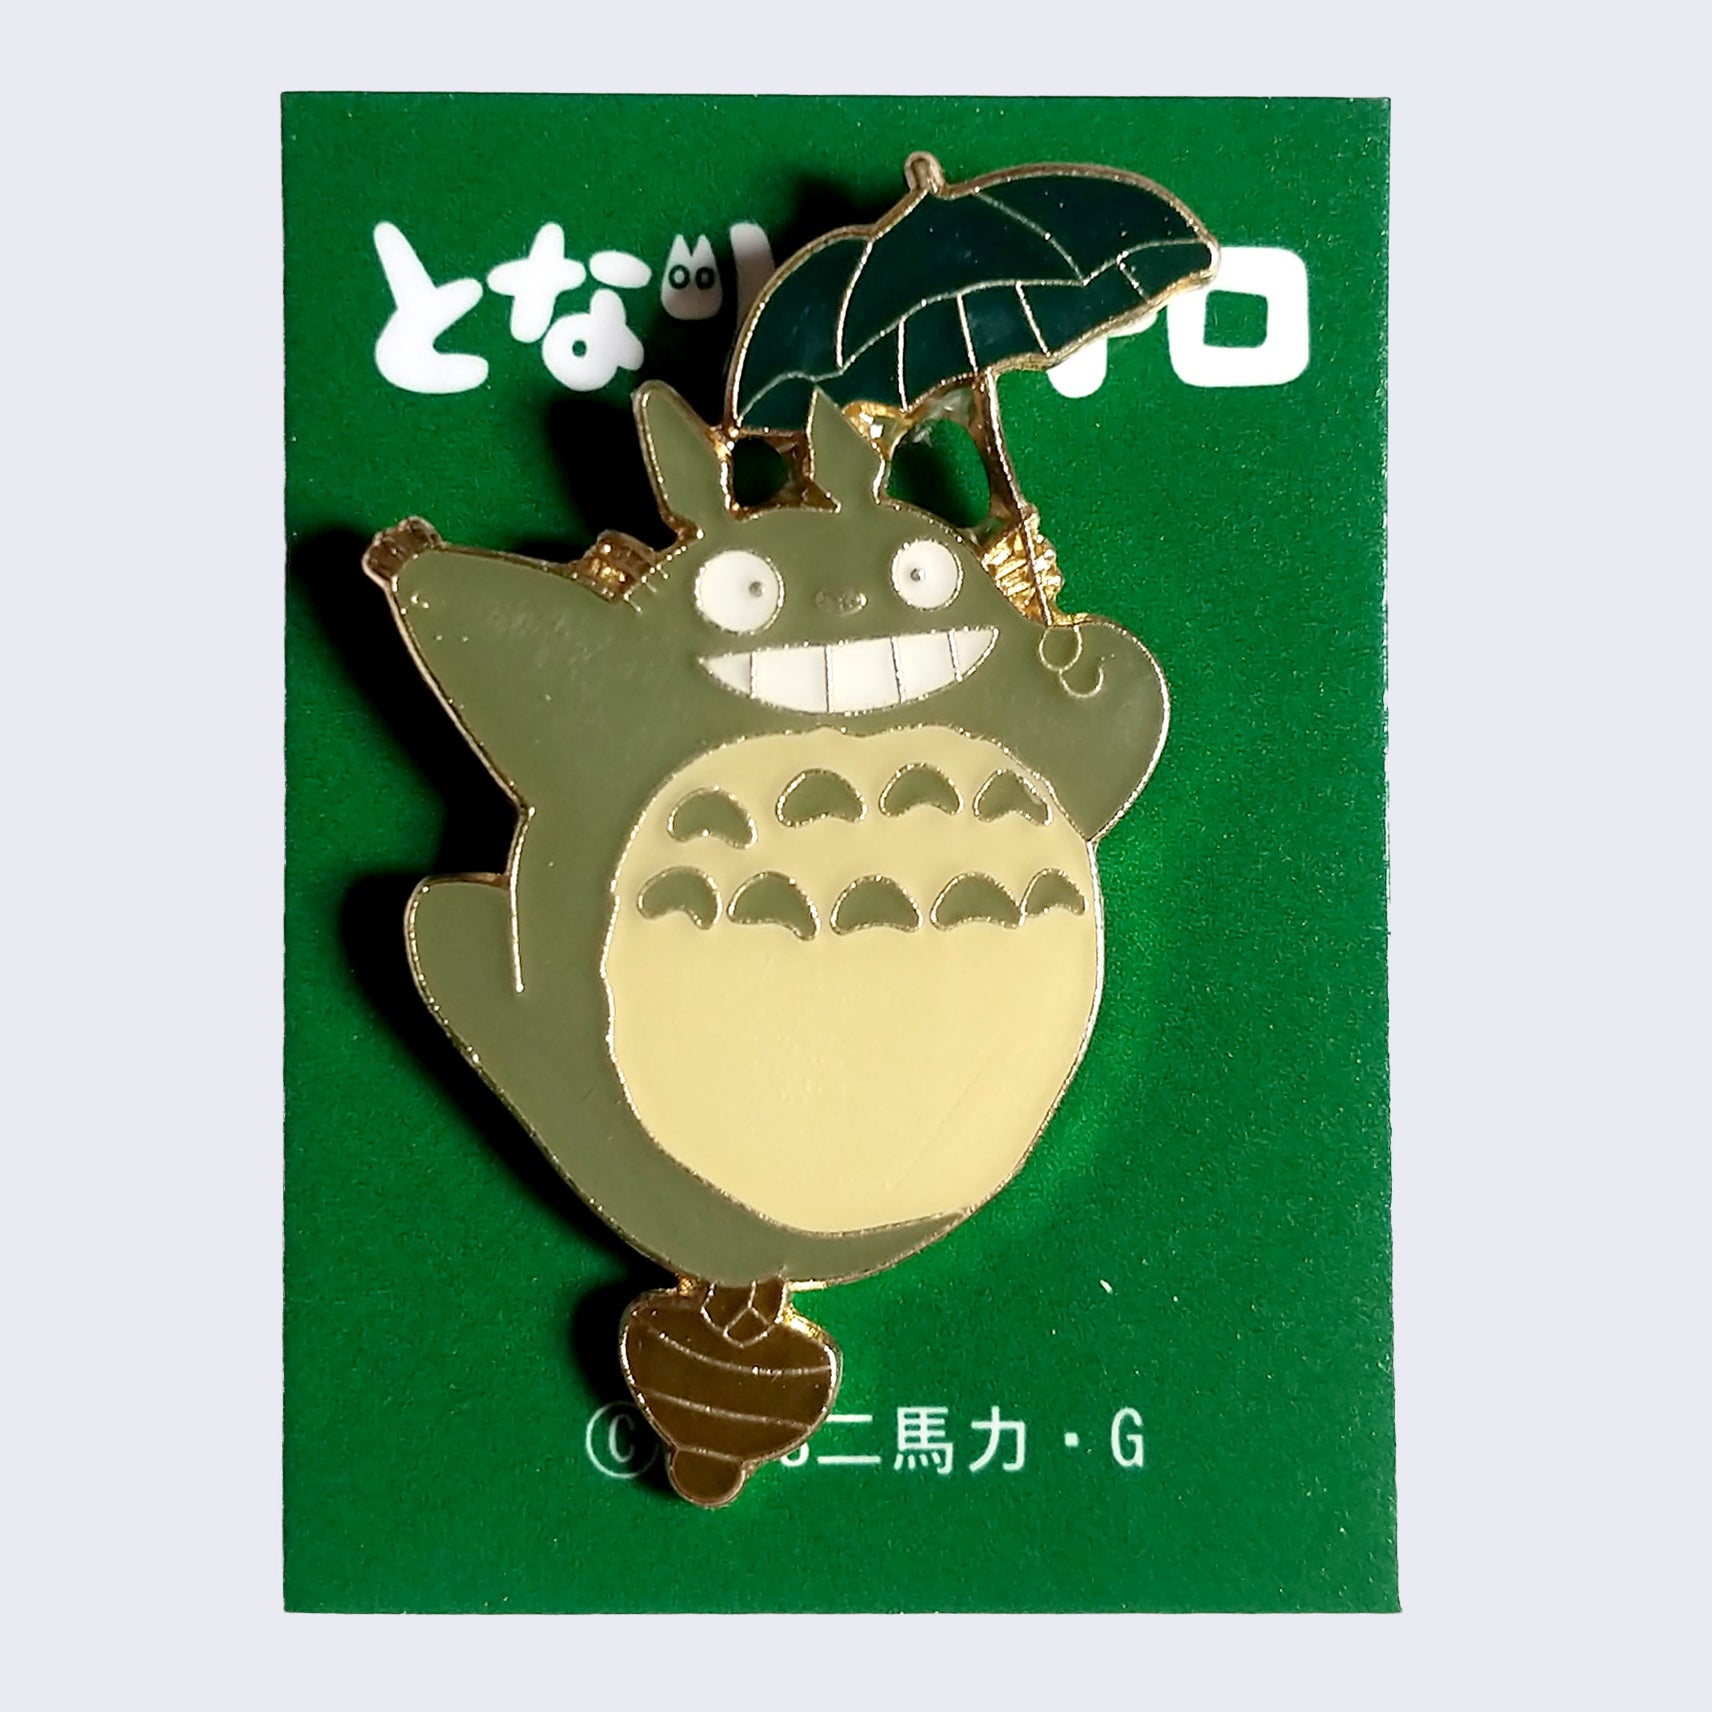 Studio Ghibli Enamel Pin - Totoro Flying Umbrella on an Acorn